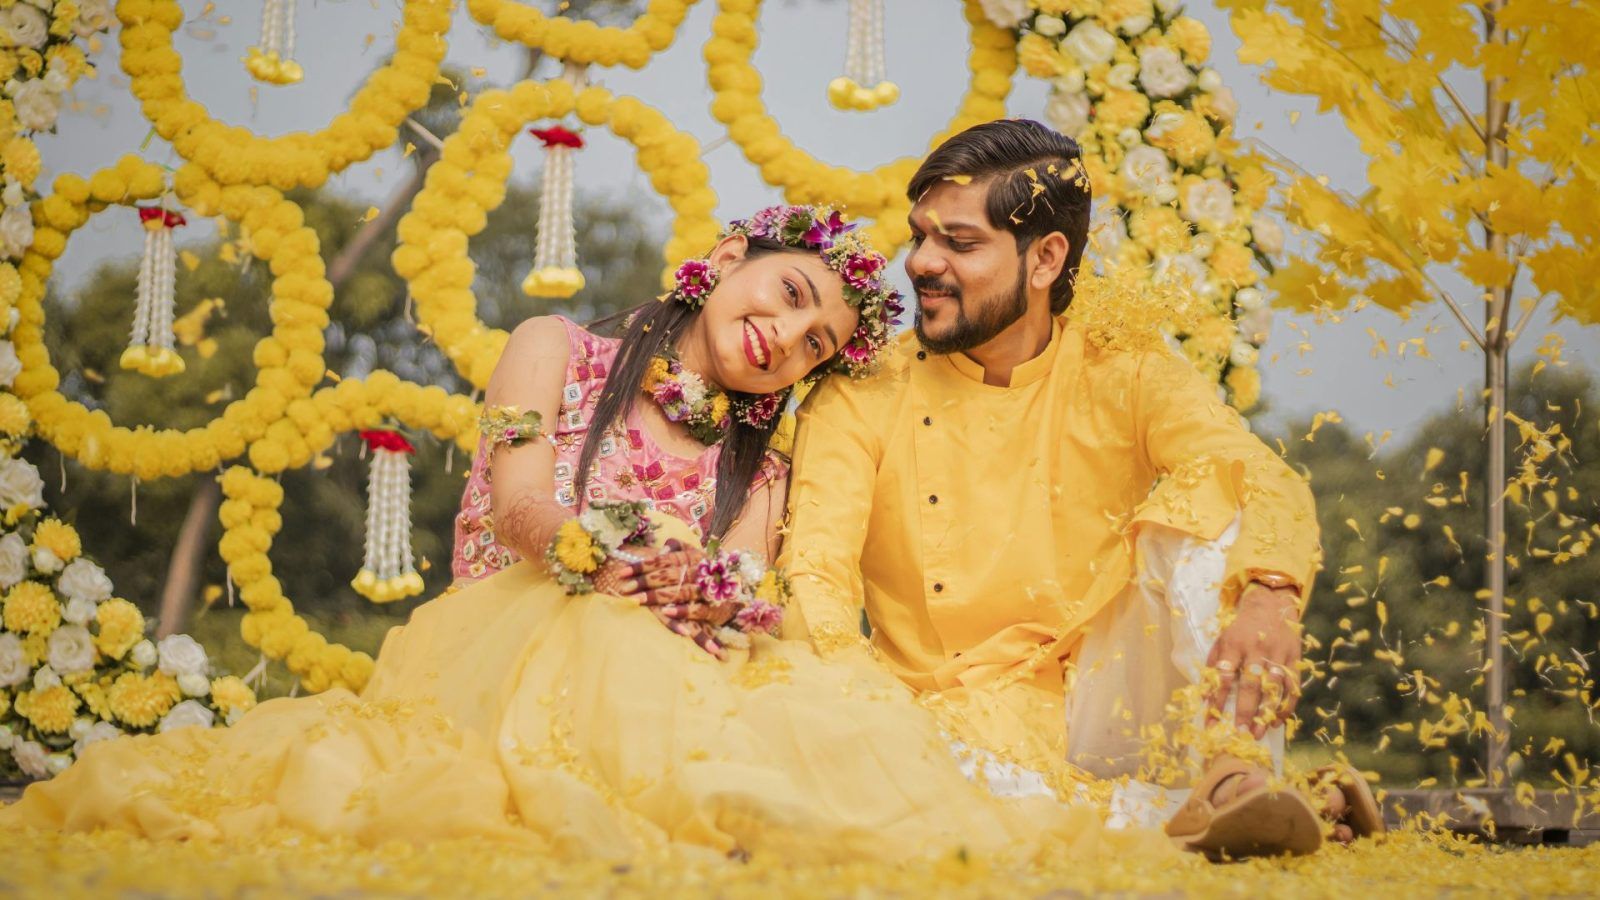 Unique haldi ceremony photoshoot ideas to make your wedding special -  Simple Craft Idea